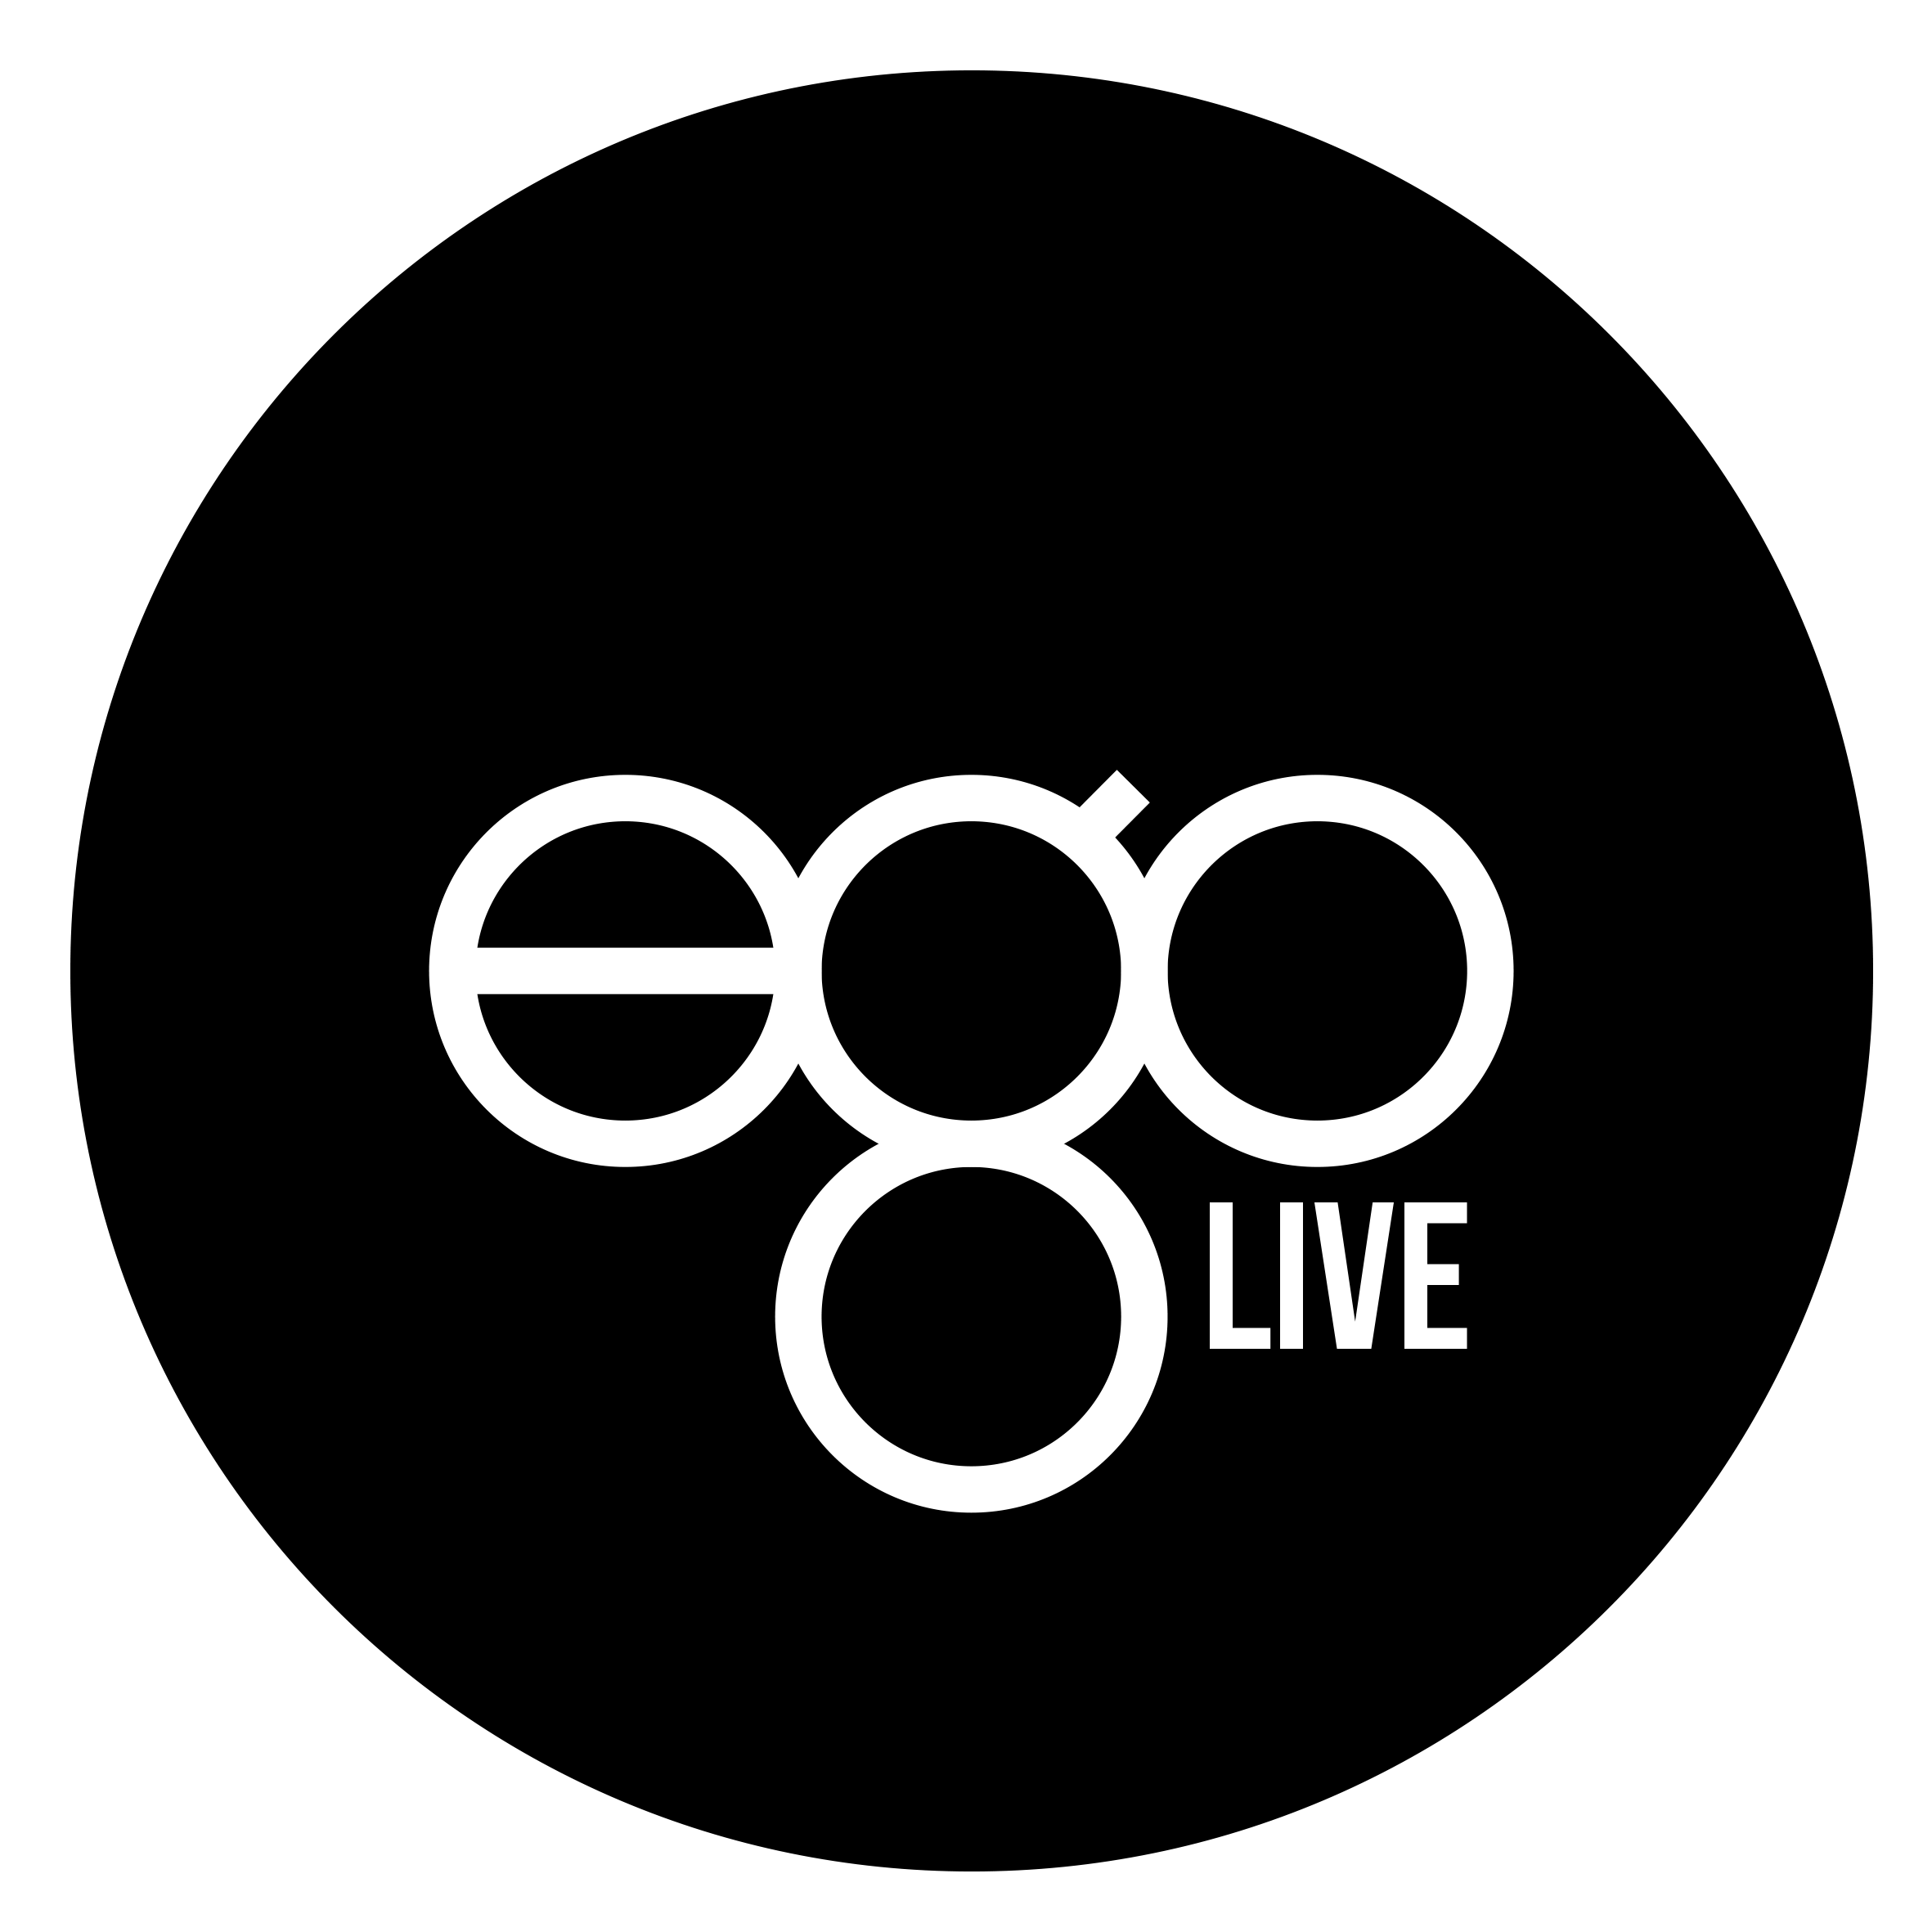 Sala Ego Live logo